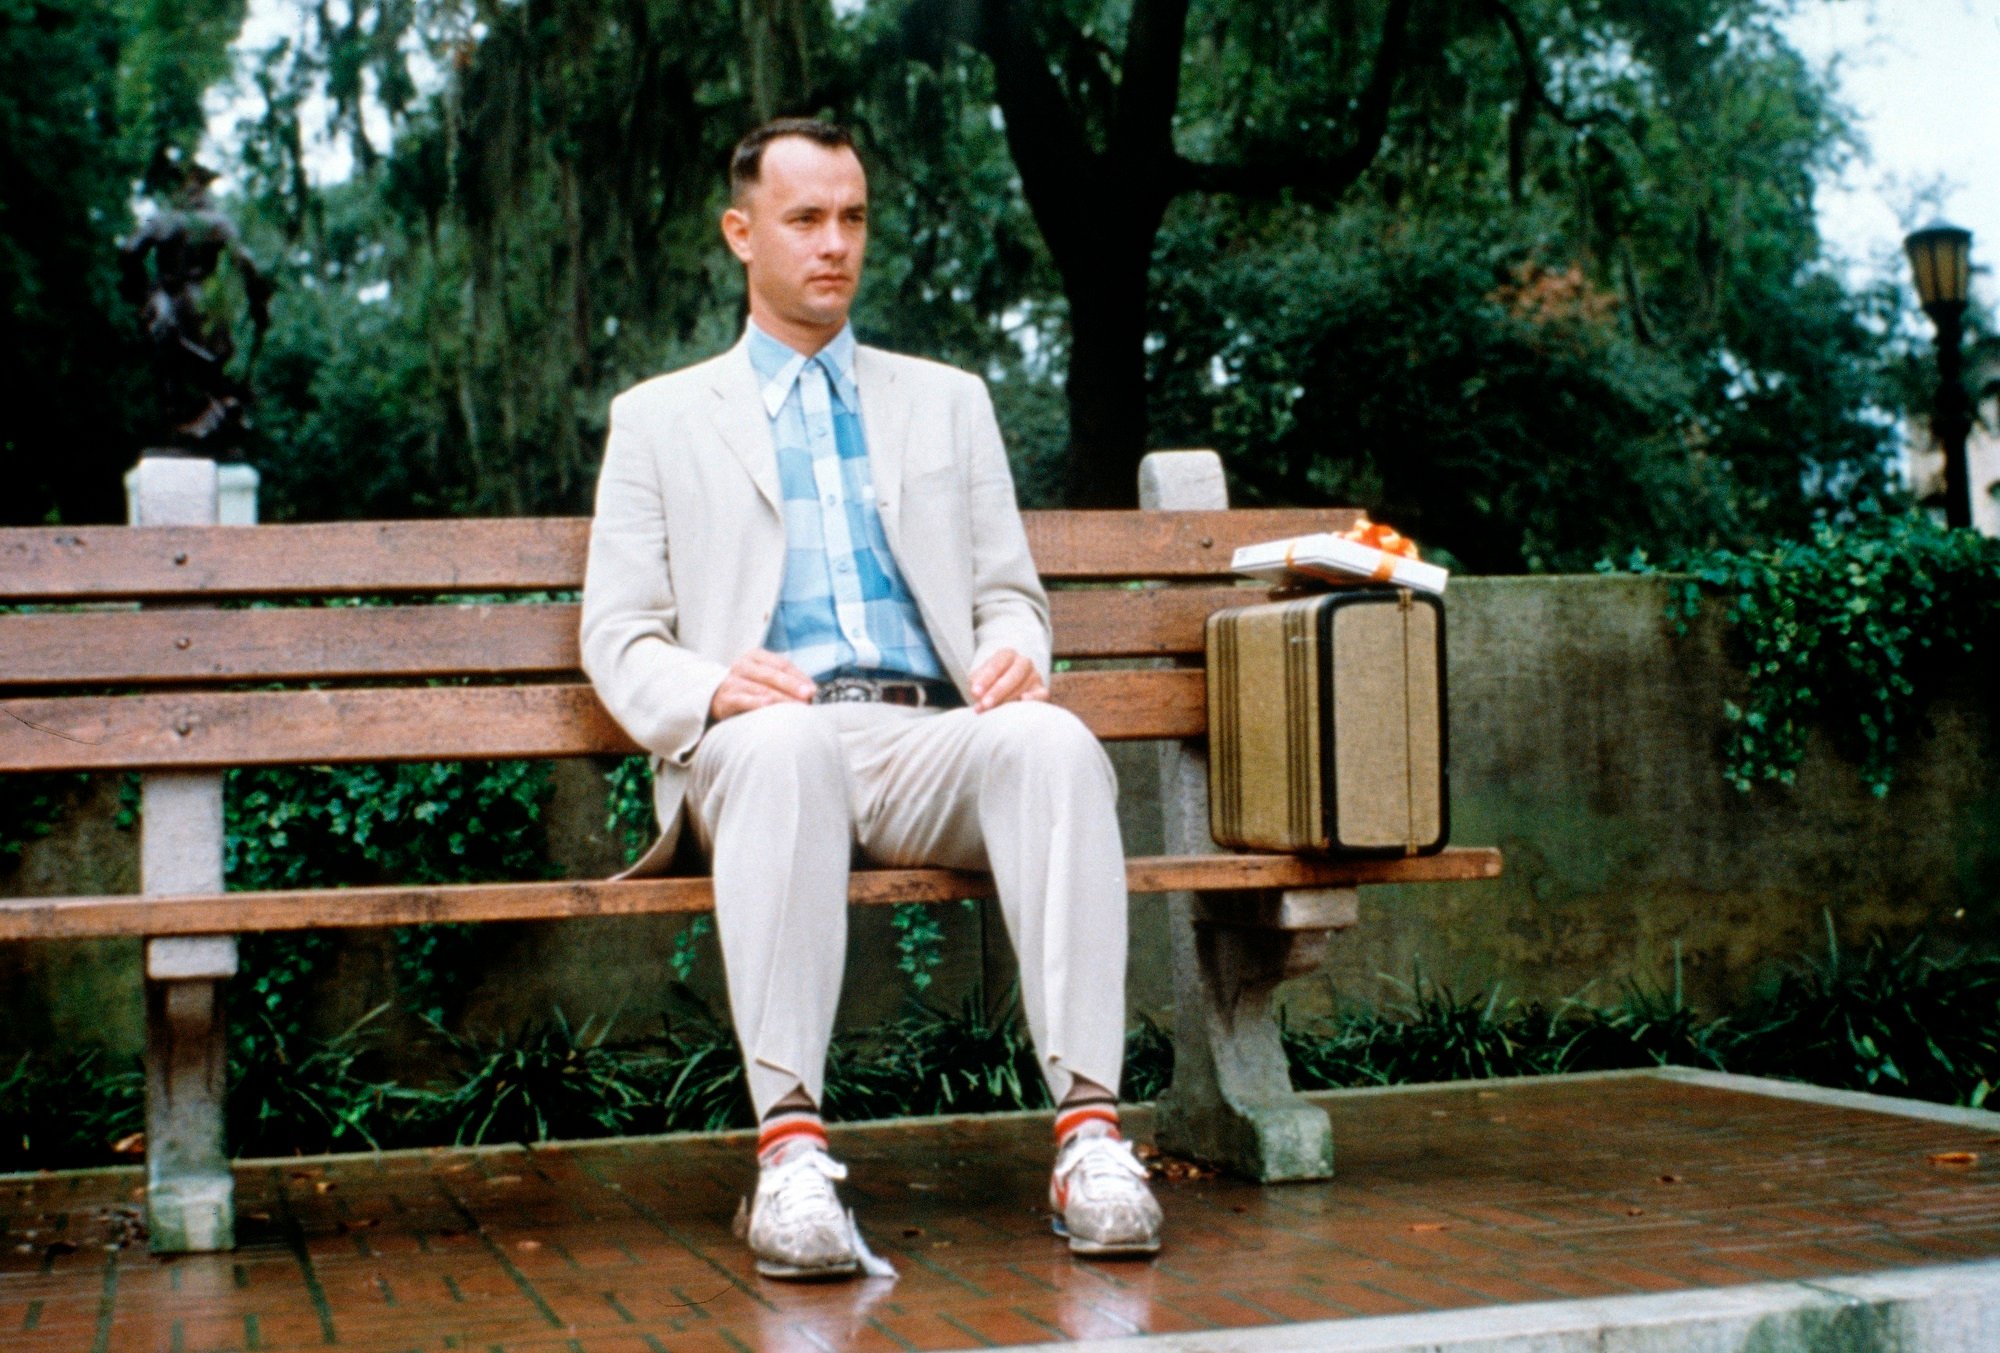 Tom Hanks sitting on the bench as Forrest Gump